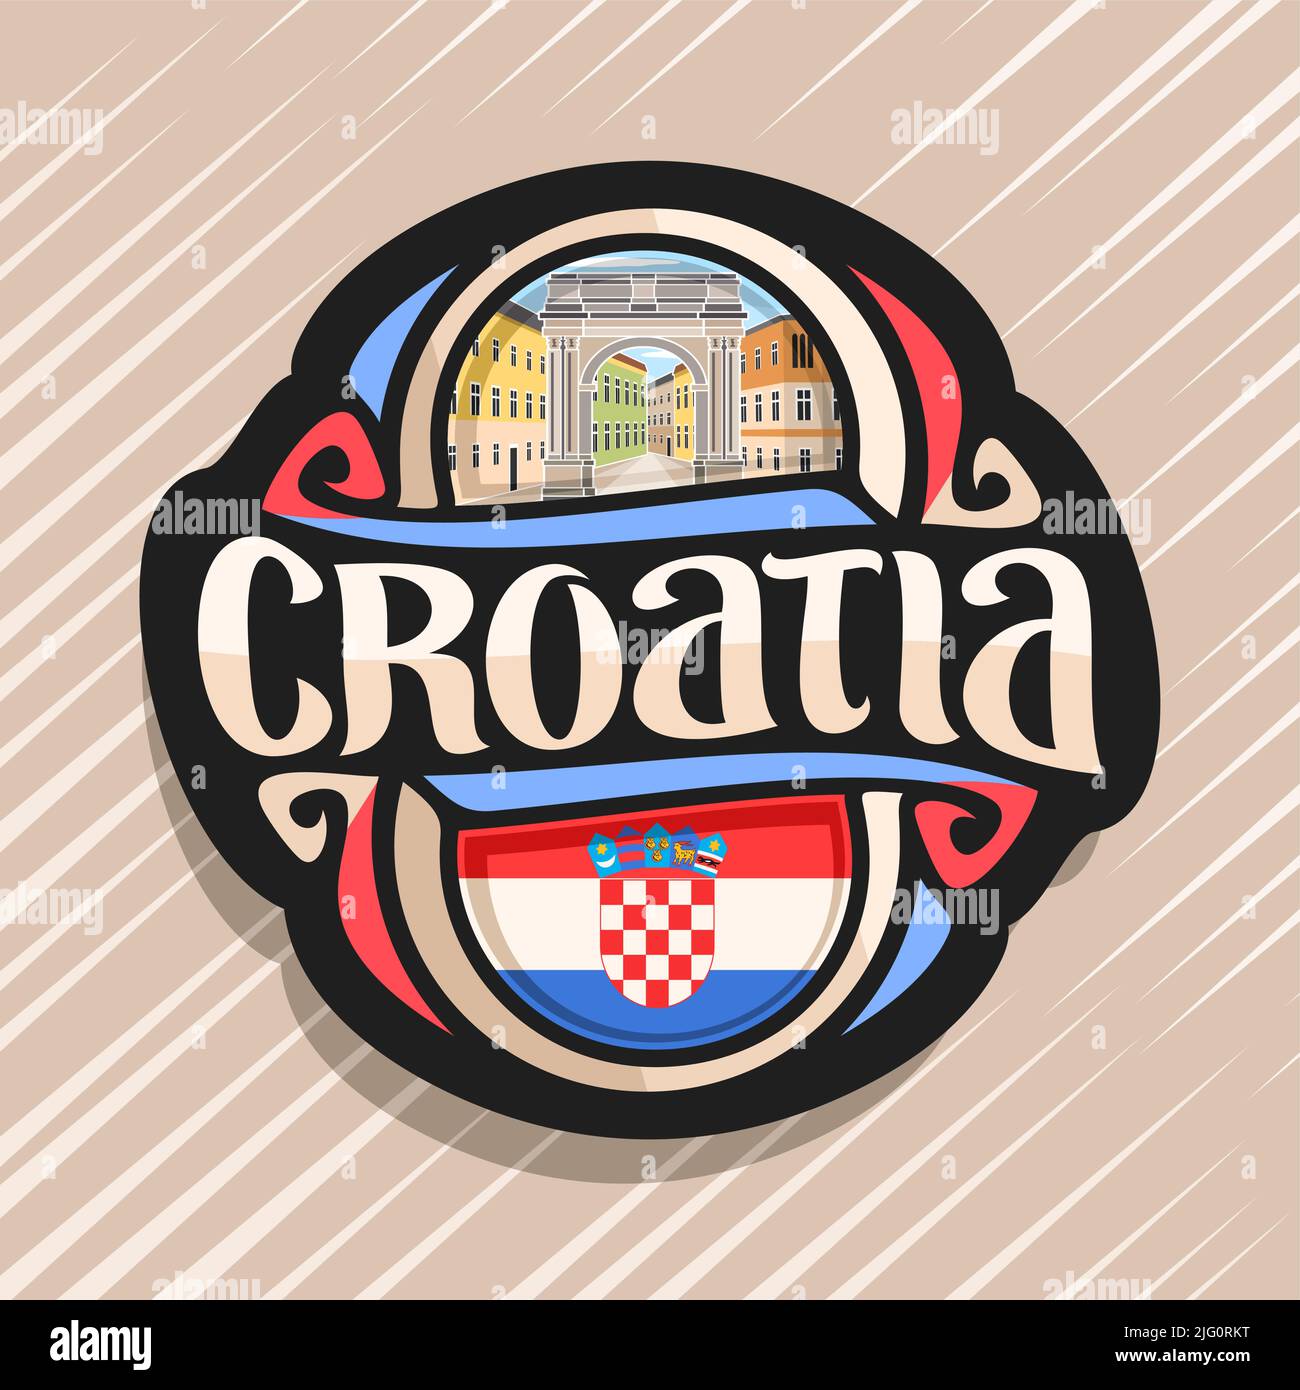 Vector logo for Croatia country, fridge magnet with croatian flag, original brush typeface for word croatia and national croatian symbol - Triumphal A Stock Vector